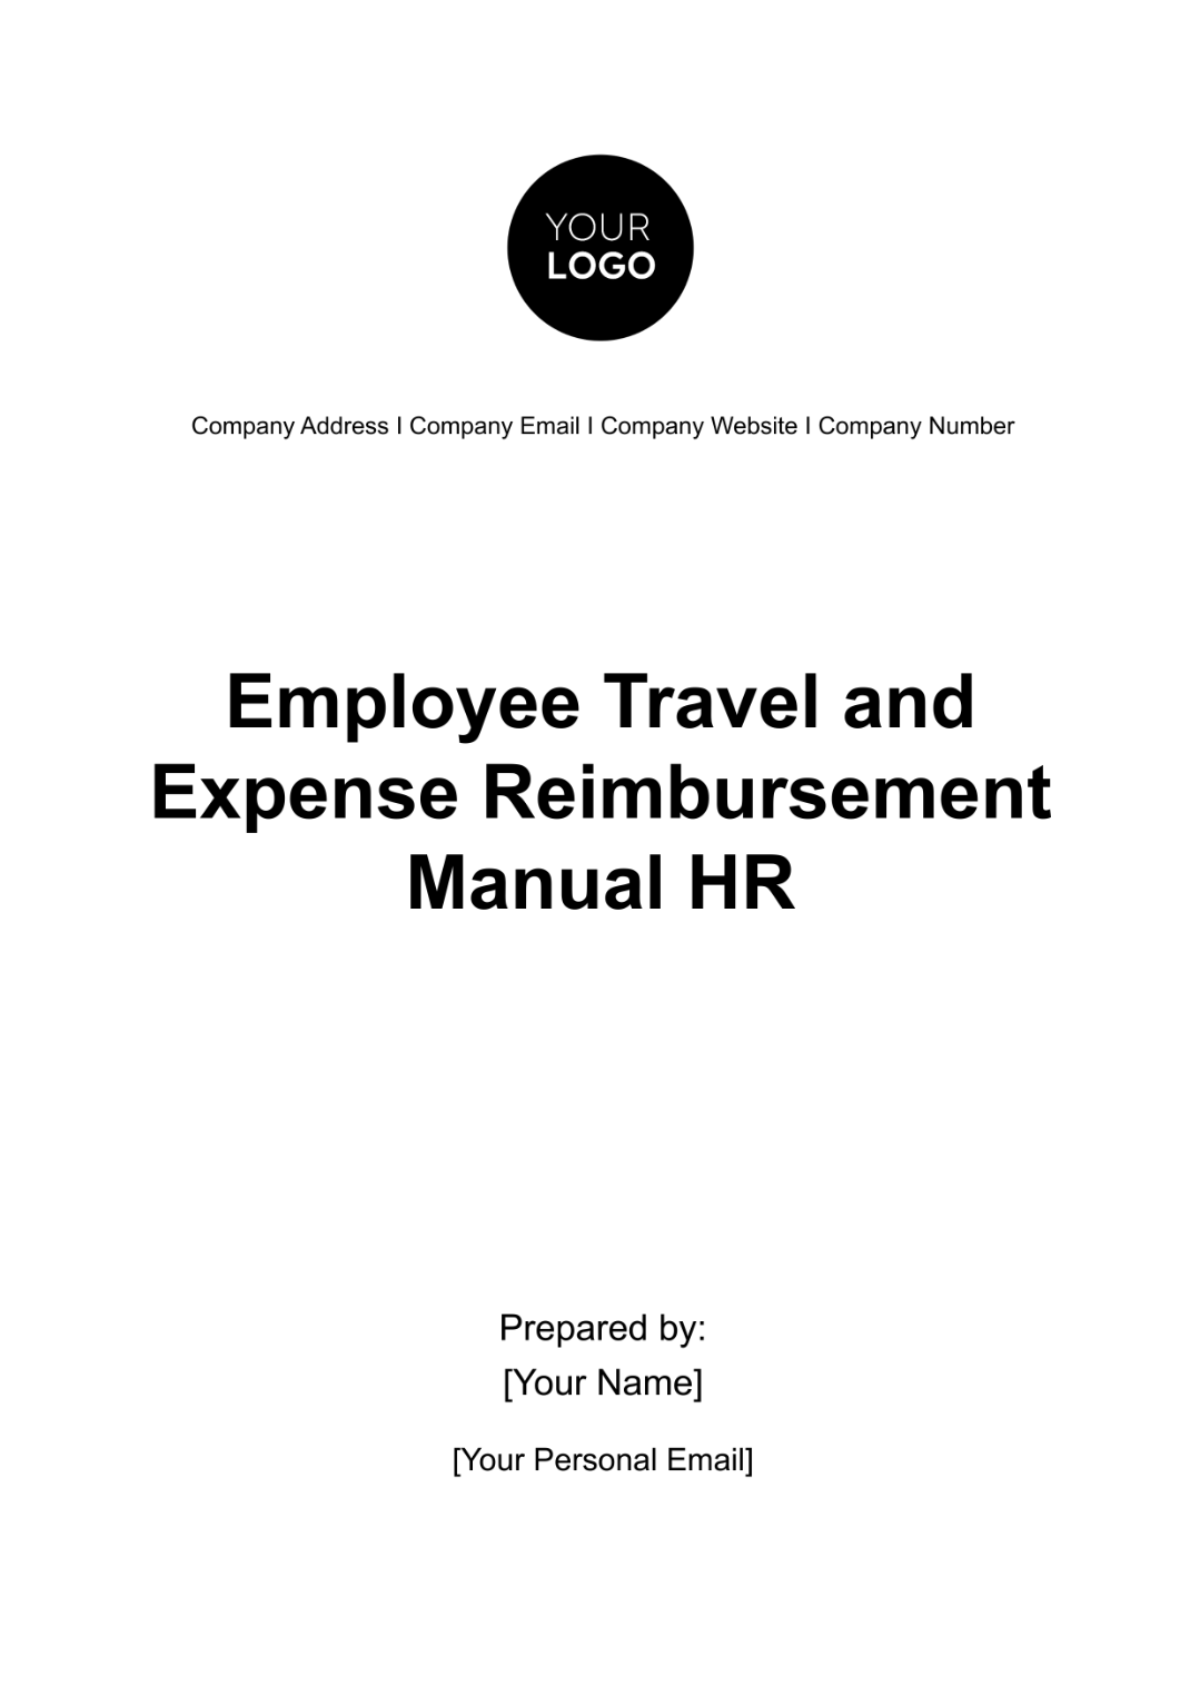 Free Employee Travel and Expense Reimbursement Manual HR Template